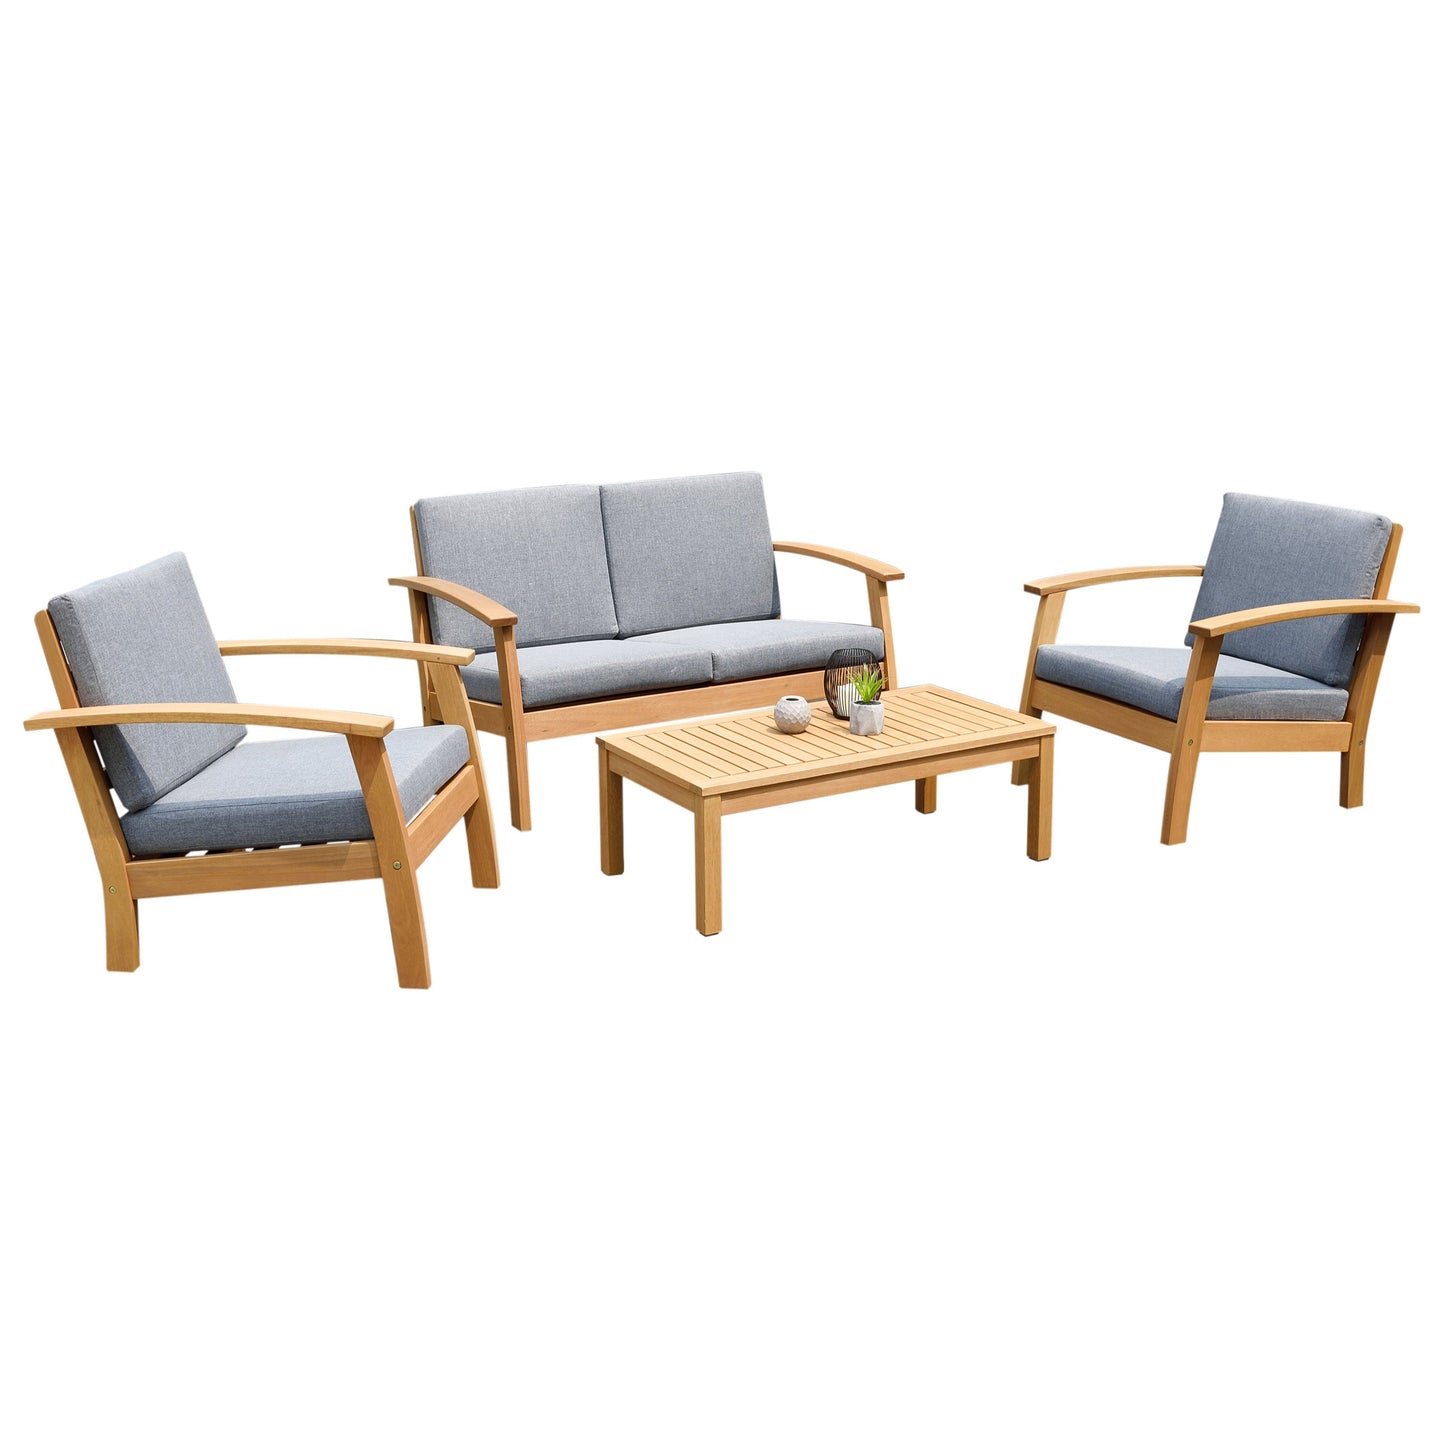 Kingsbury Teak Finish 100% FSC Certified Solid Wood With Grey Cushion Seating Set